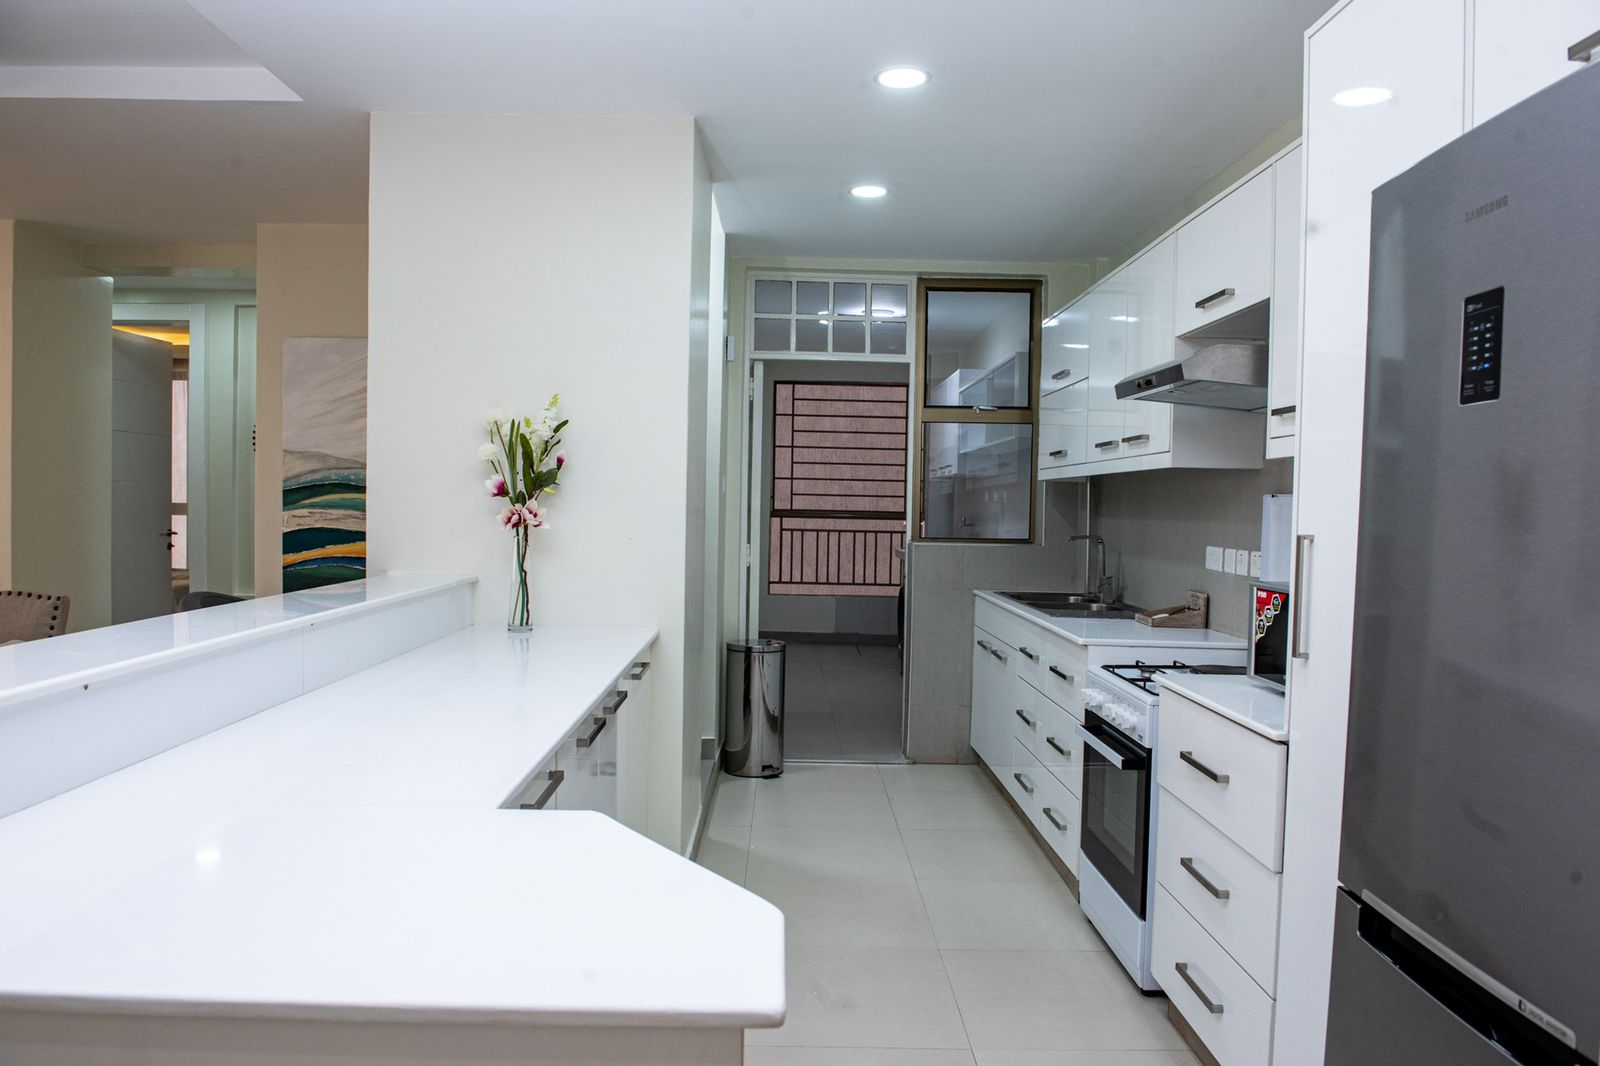 An Elegant Fully Furnished 2 Bedroom Apartments For Rent In Kileleshwa at Ksh180k:Month15